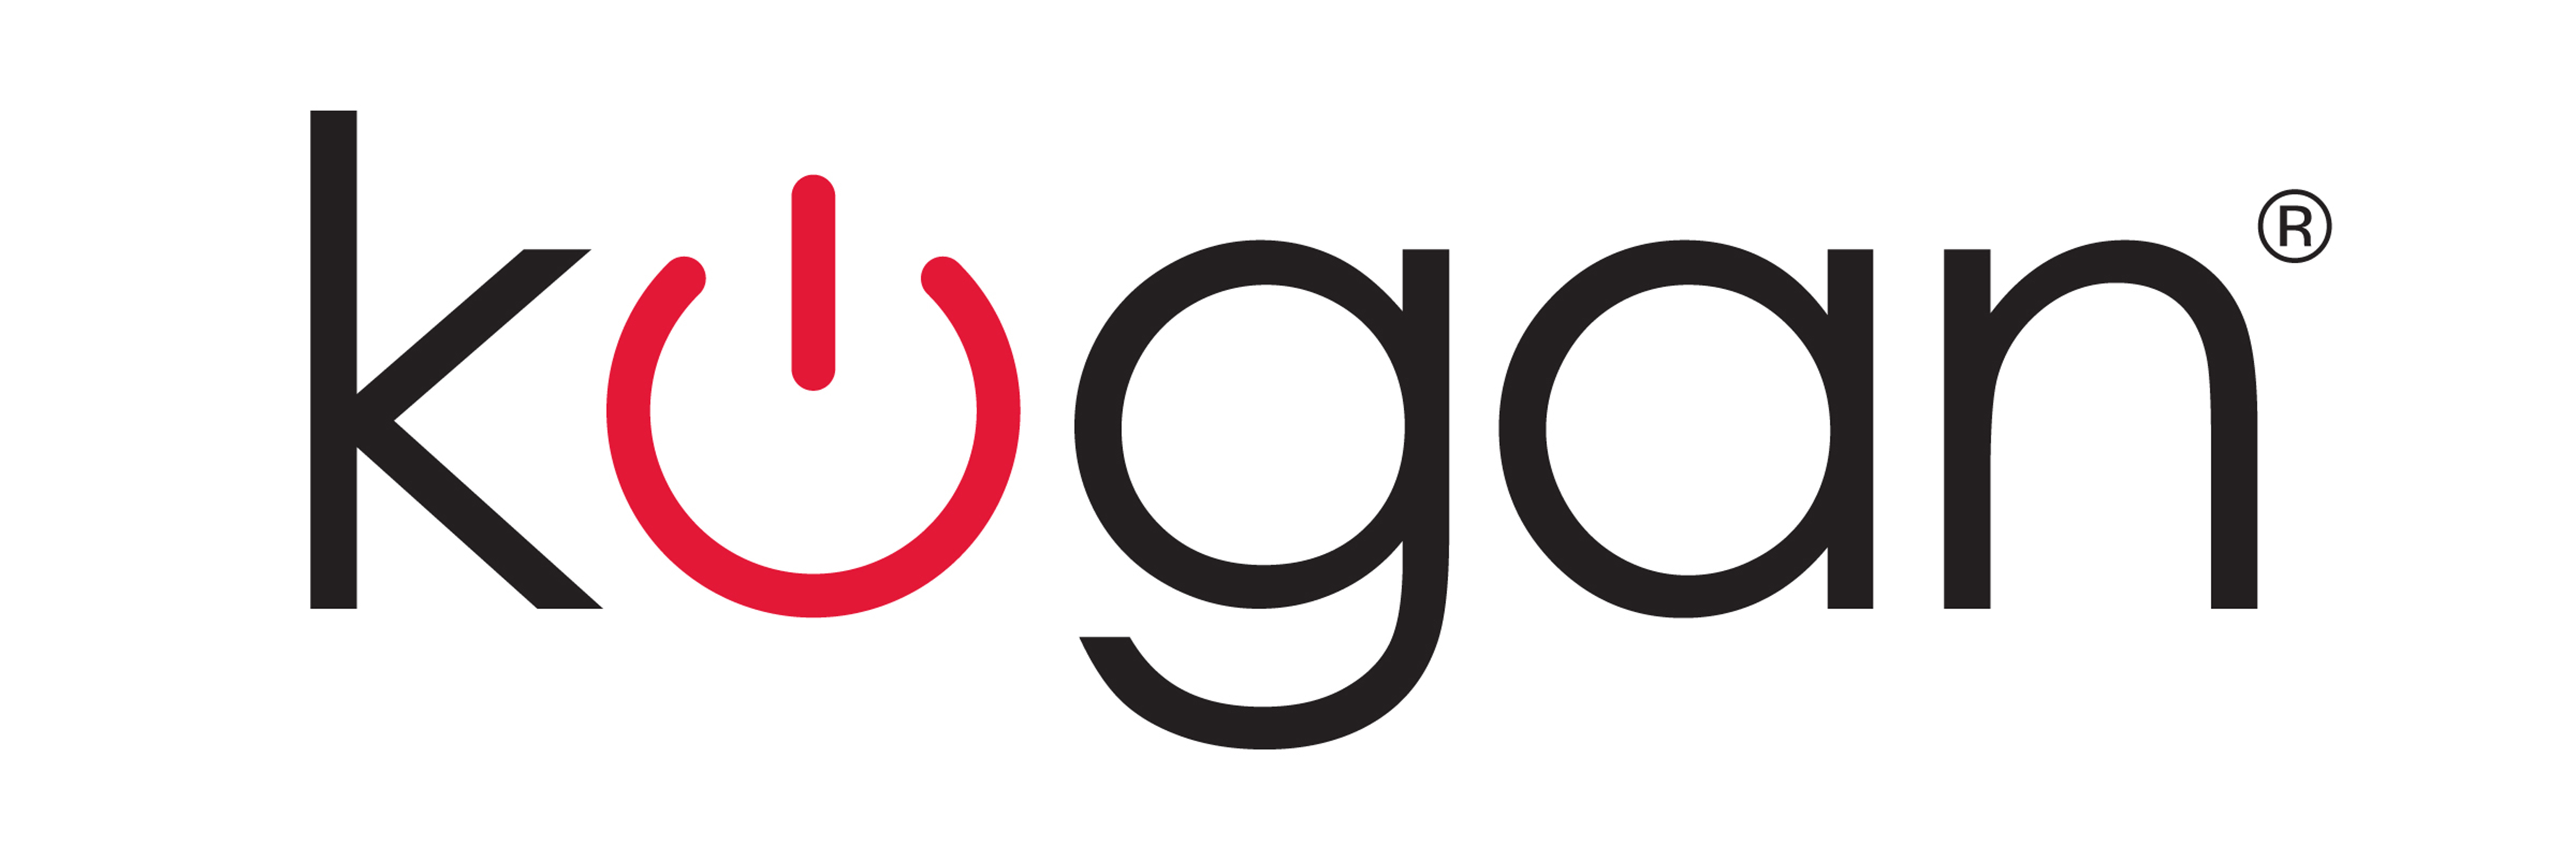 Kogan_logo